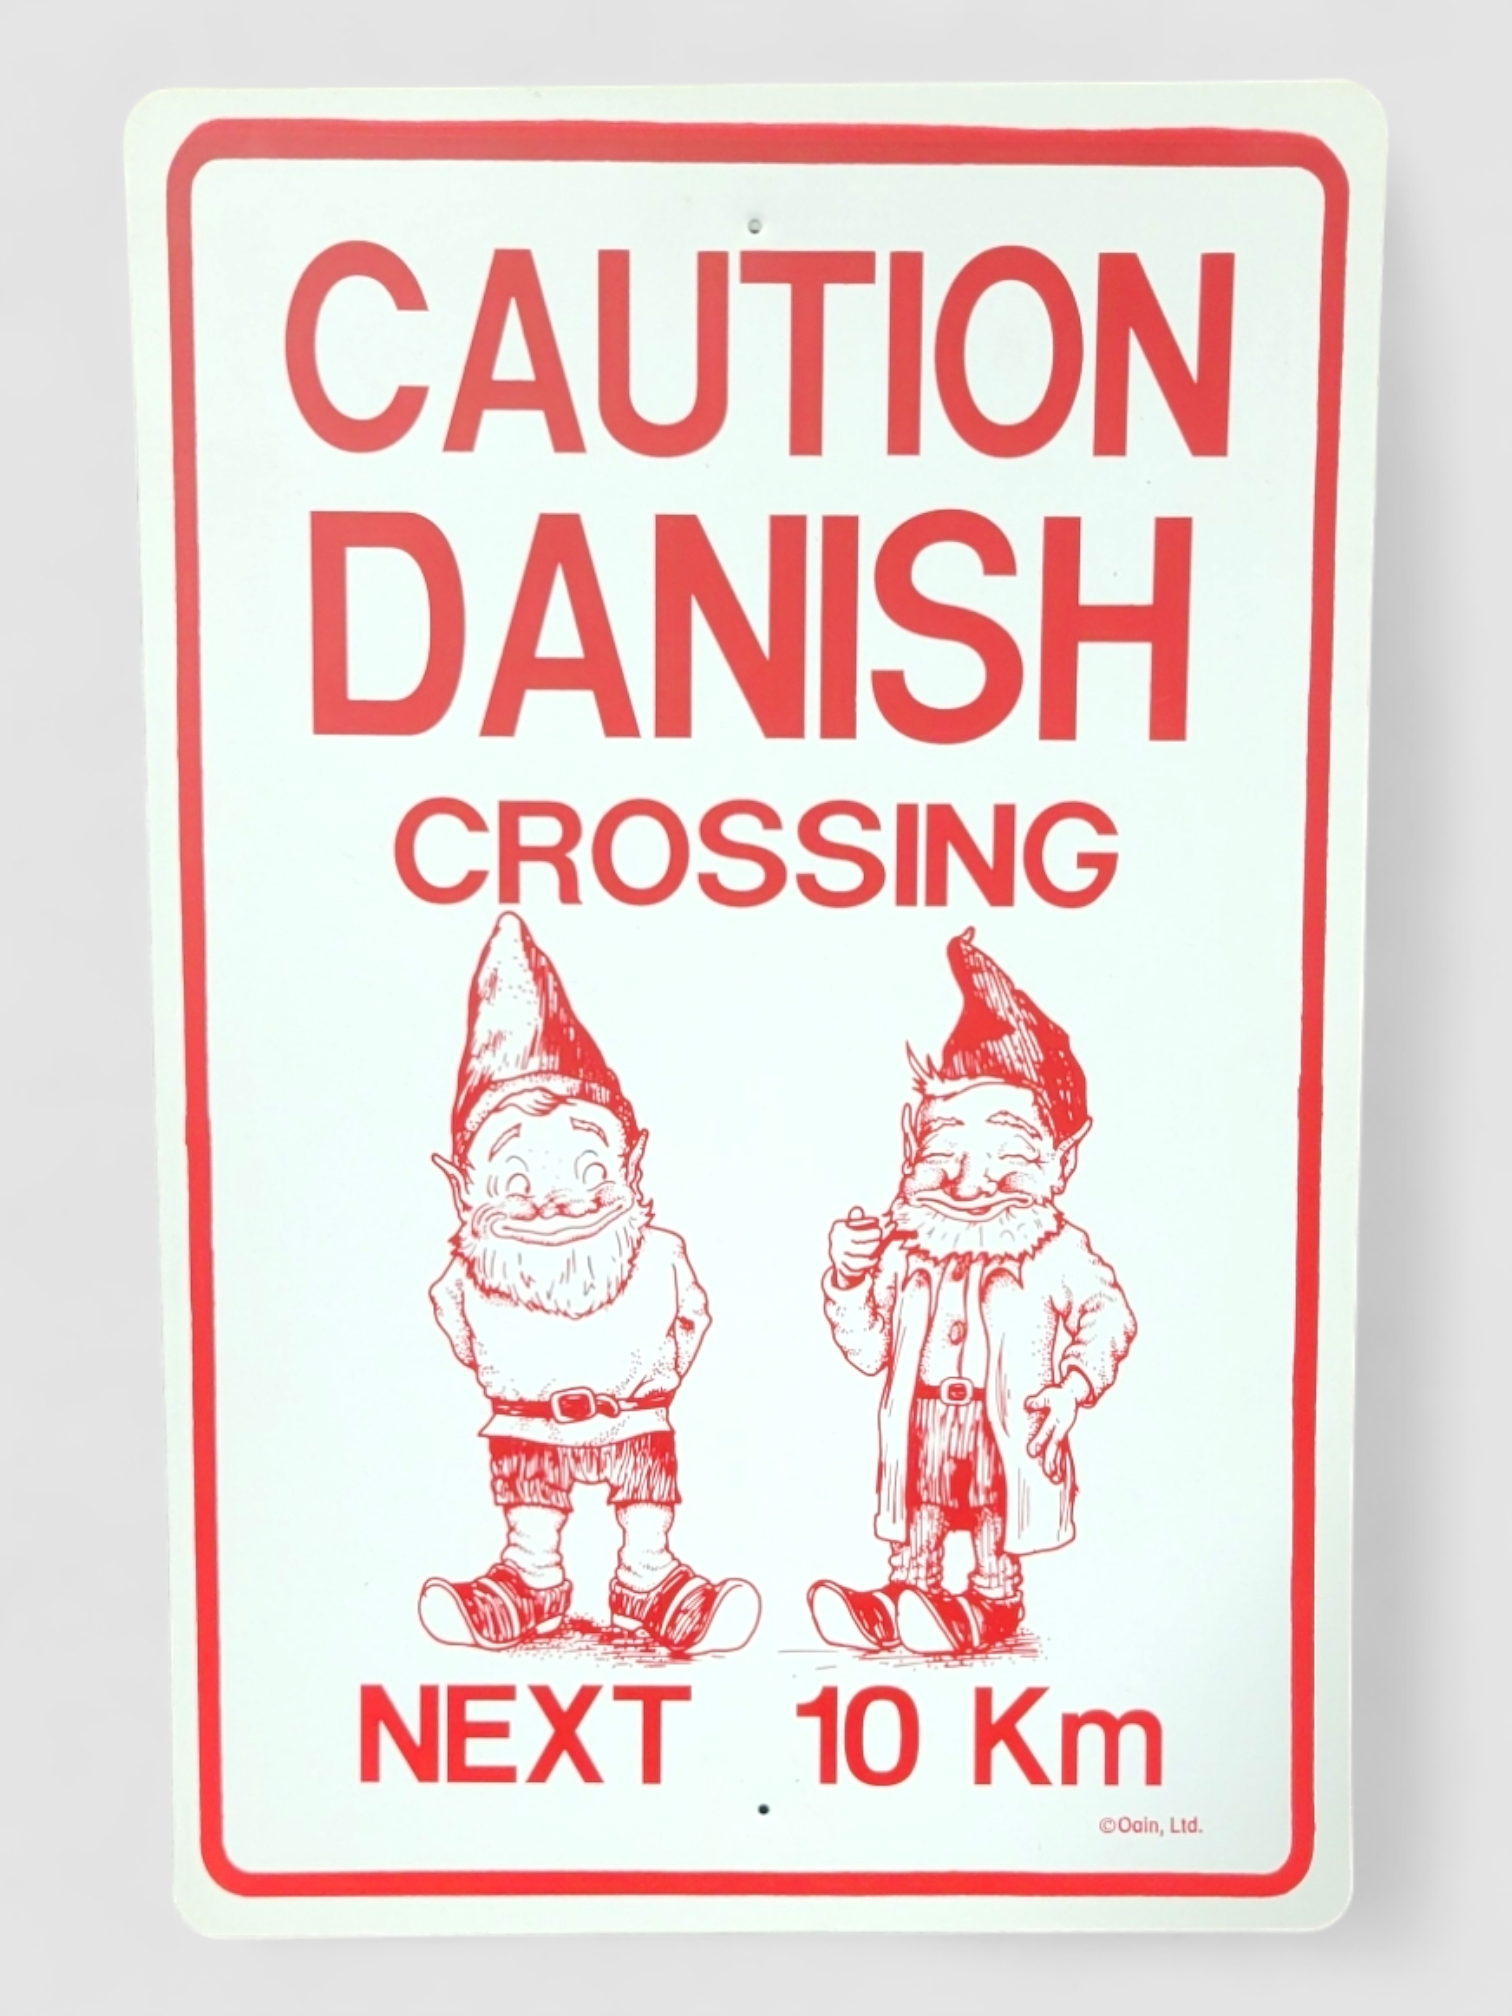 Sign: "Caution Danish Crossing"